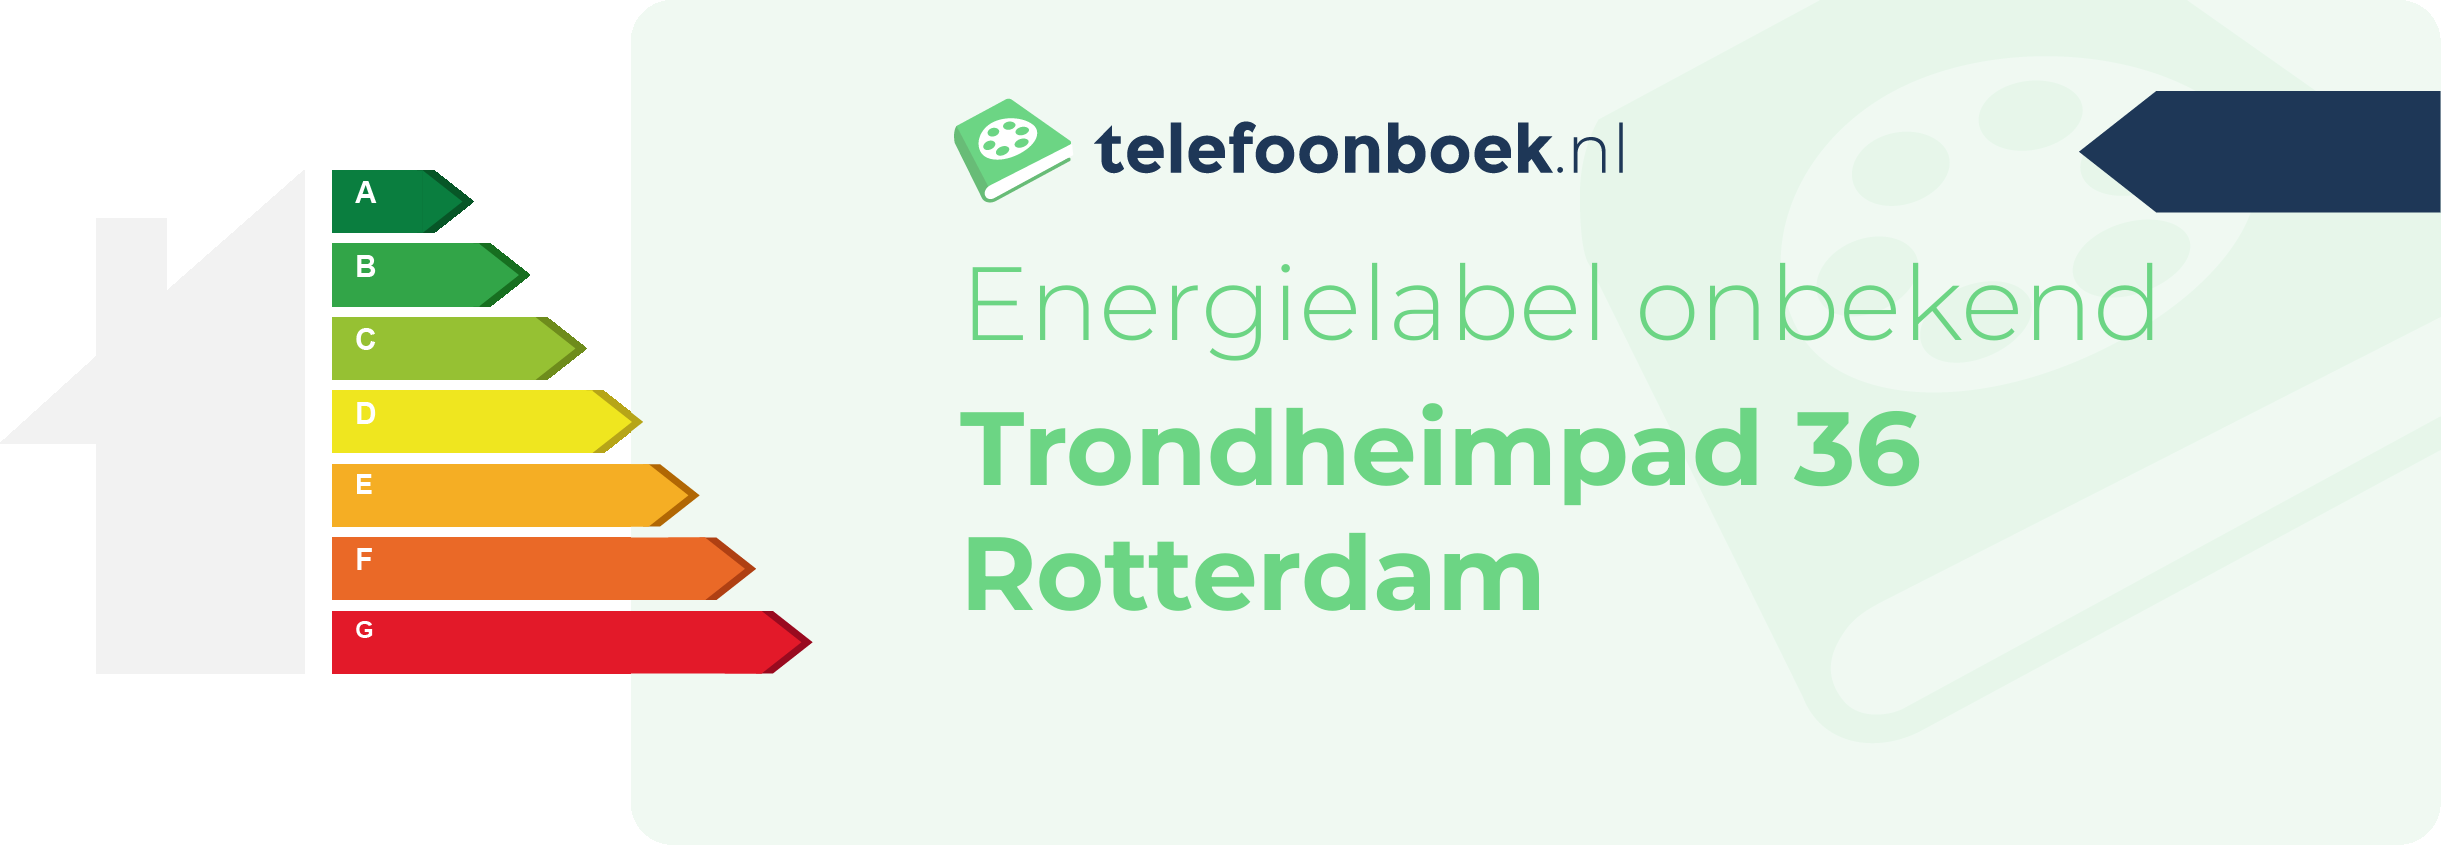 Energielabel Trondheimpad 36 Rotterdam